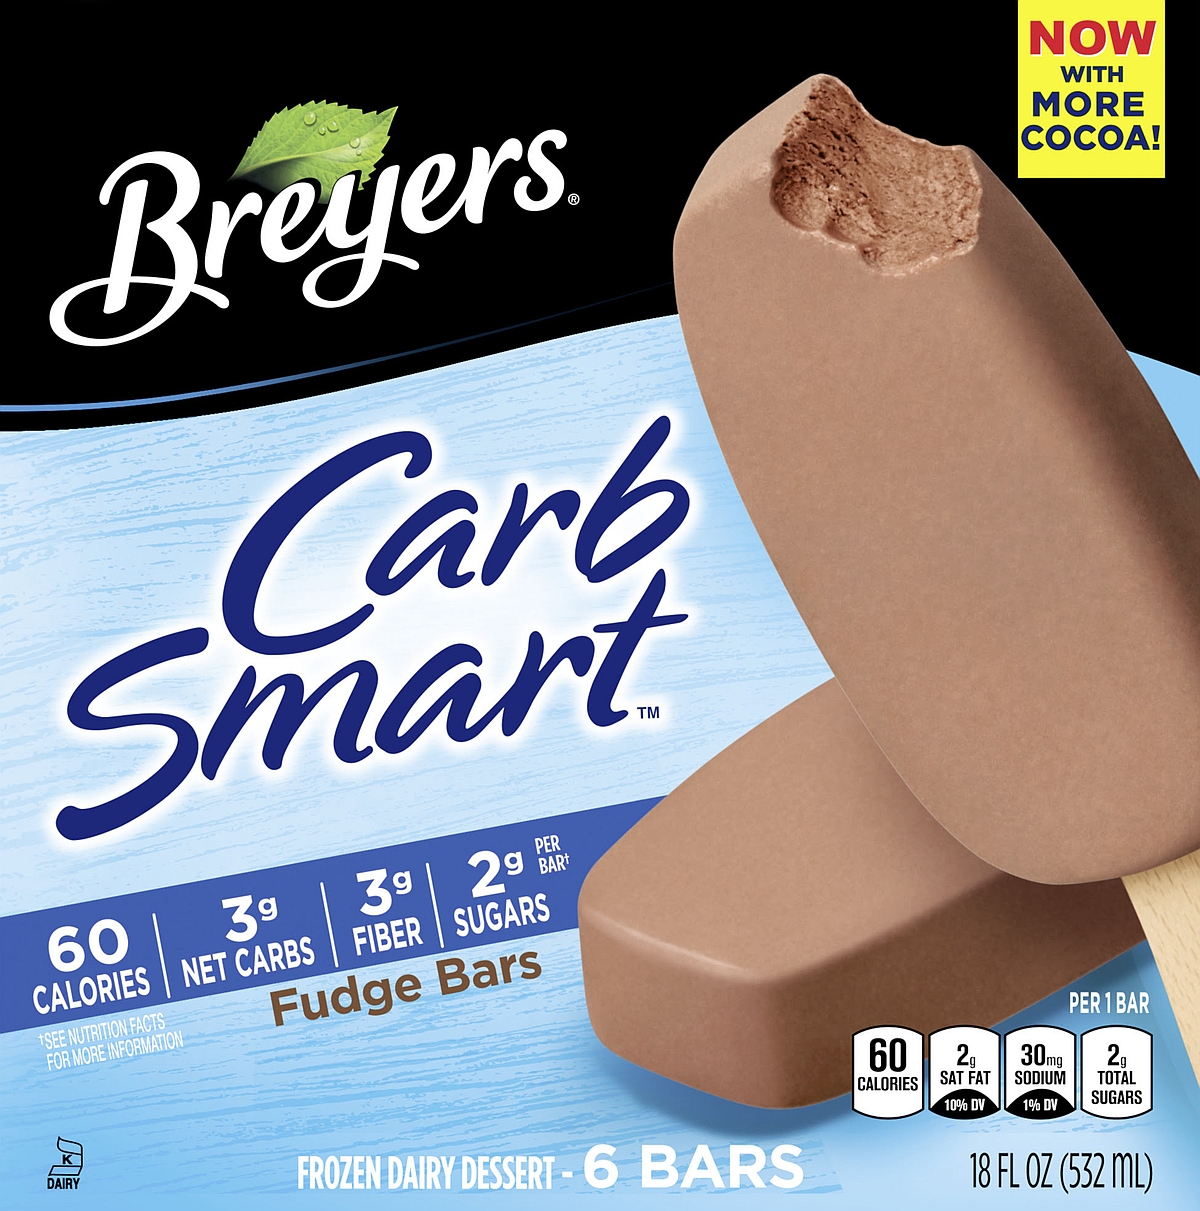 Breyers CarbSmart Fudge Bars